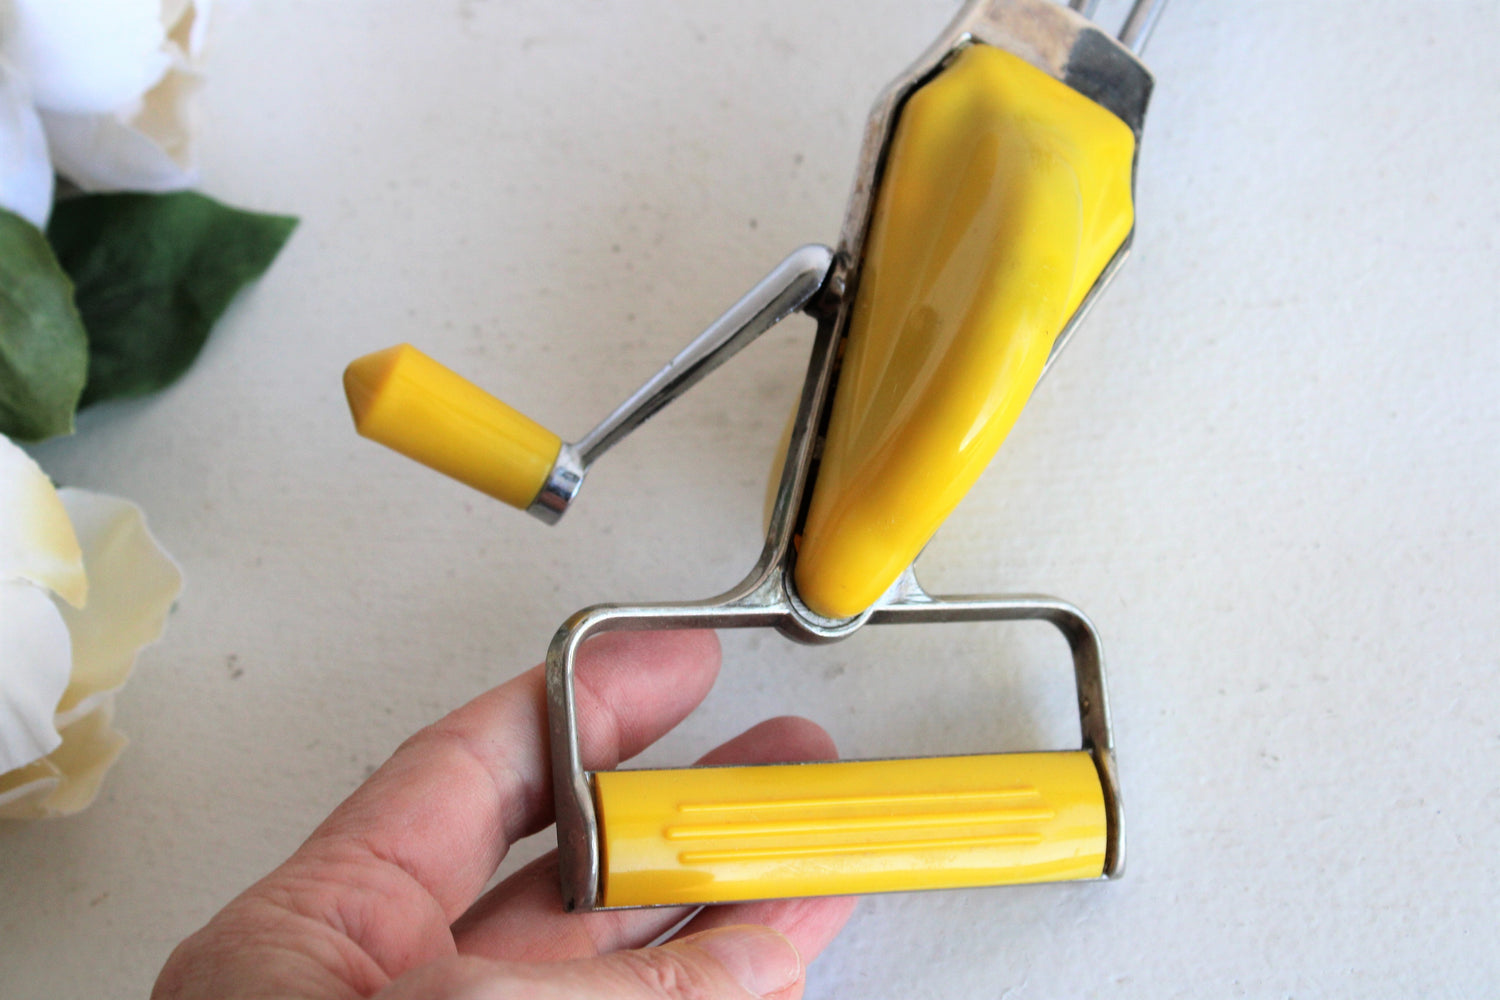 Vintage 1950s Yellow Hand Mixer